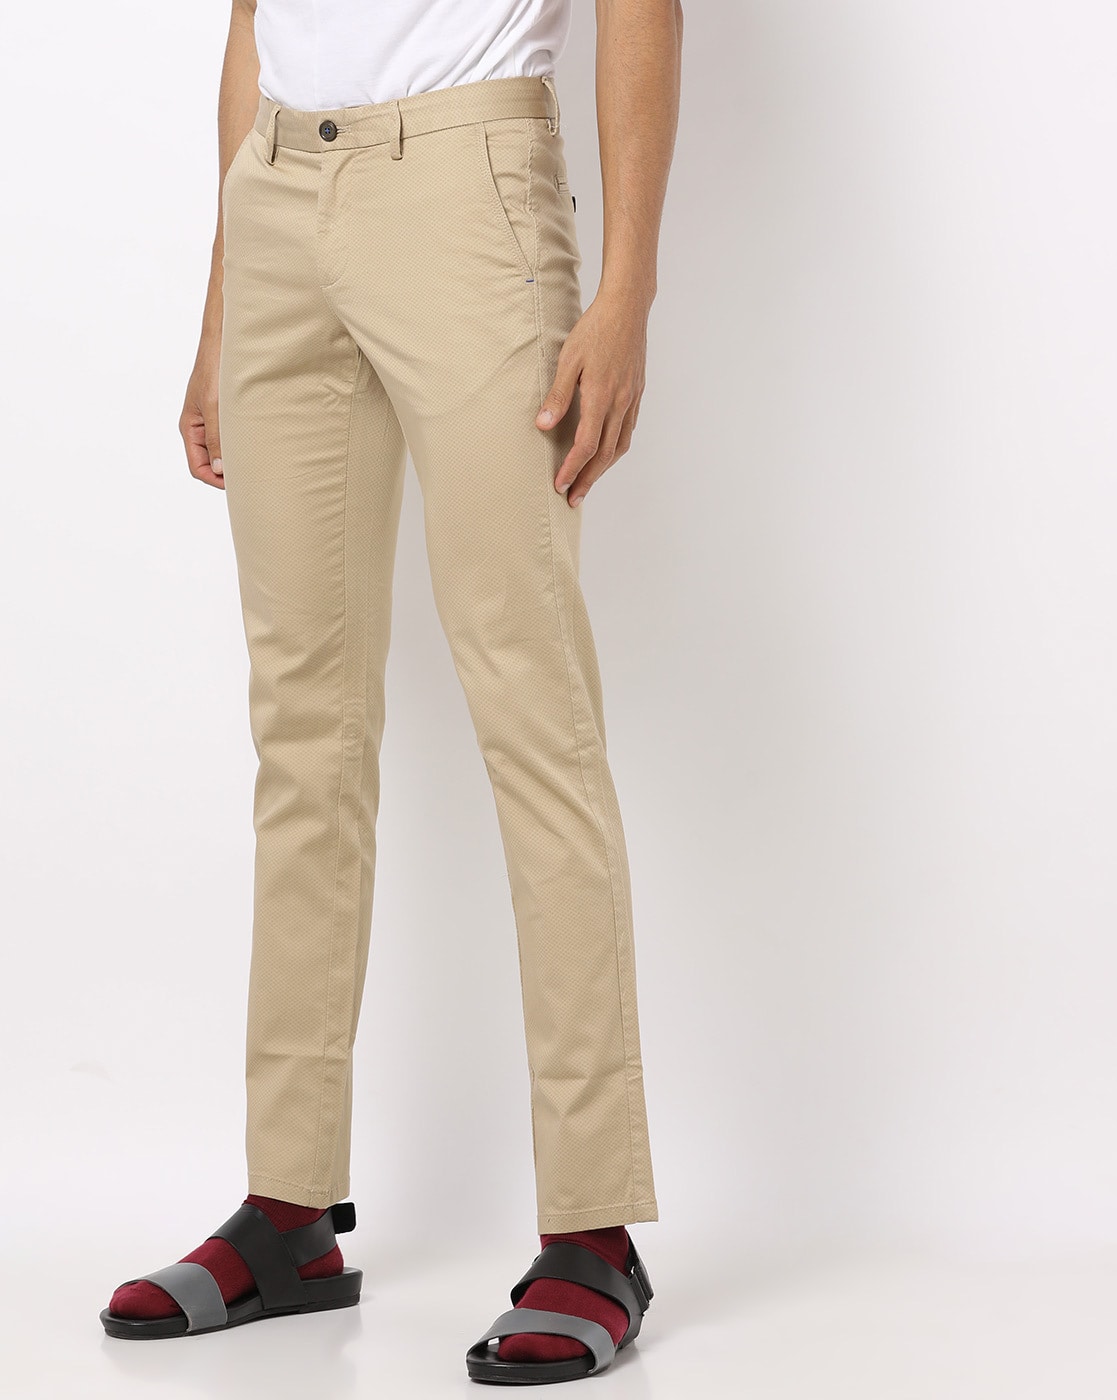 Buy Retro Pants Mens Pants Checkered Pants Green Plaid Pants Online in India   Etsy